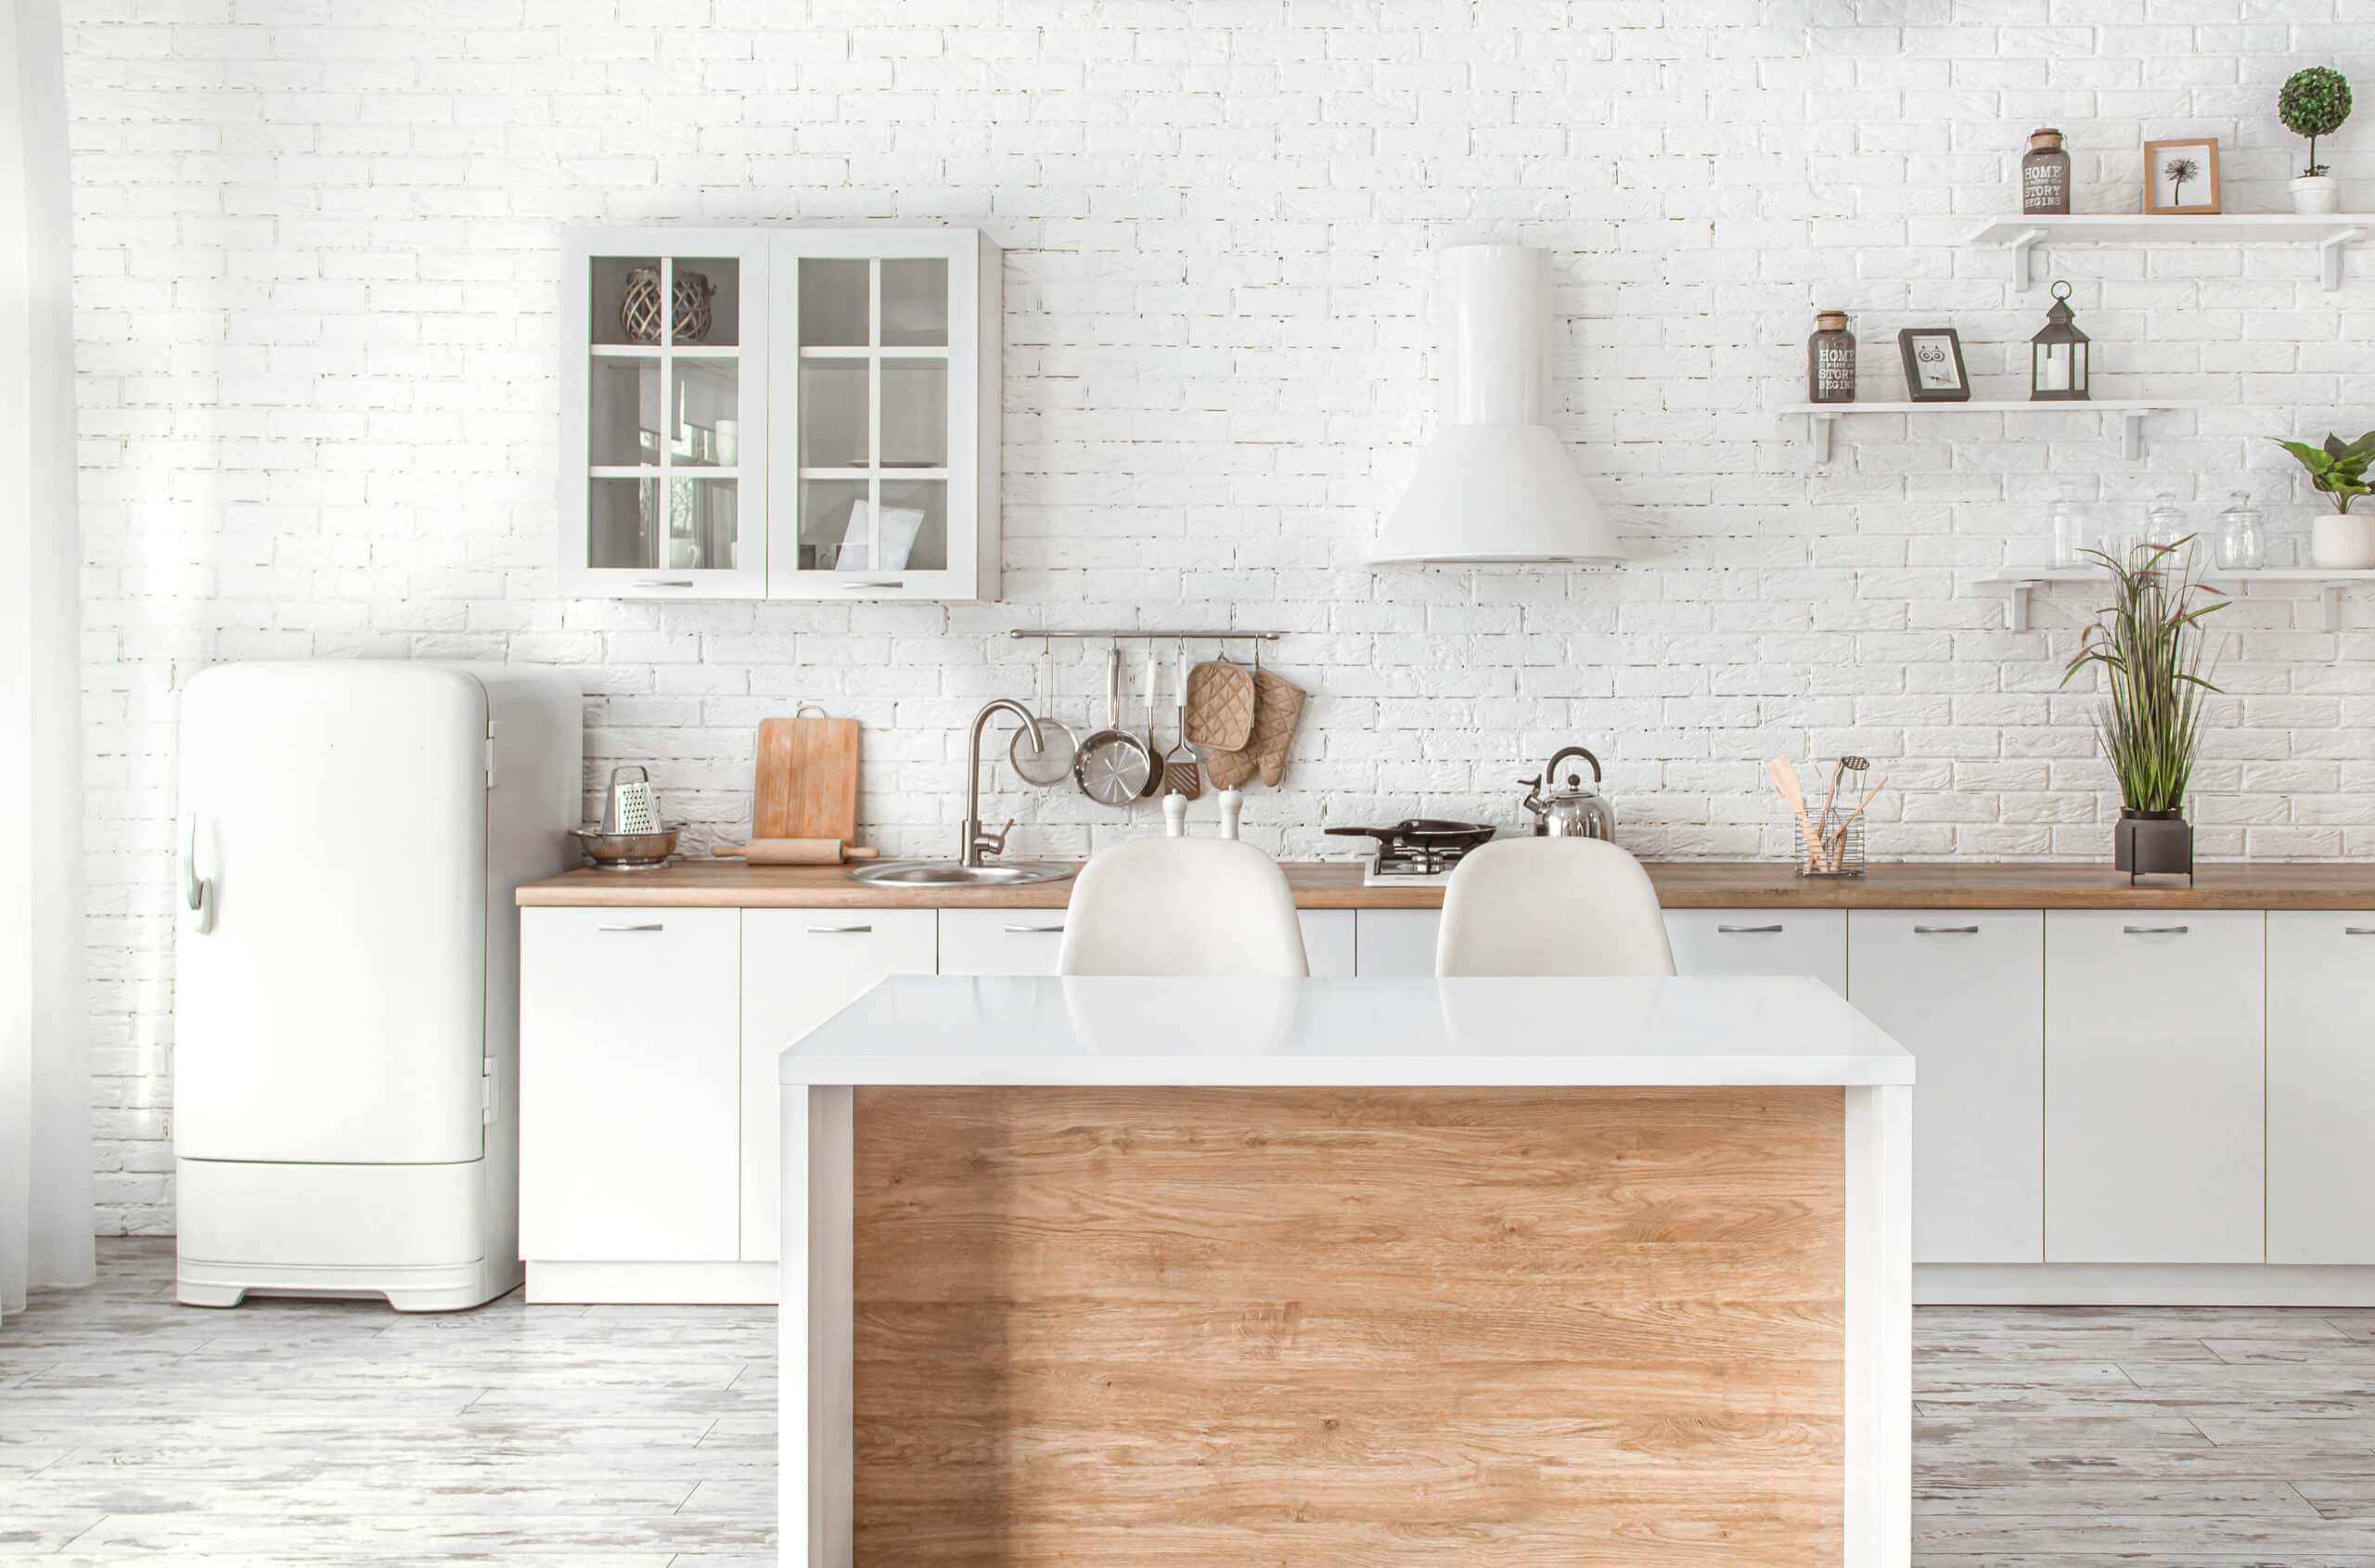 Modern stylish Scandinavian kitchen interior with kitchen accessories. Bright white kitchen with household items .